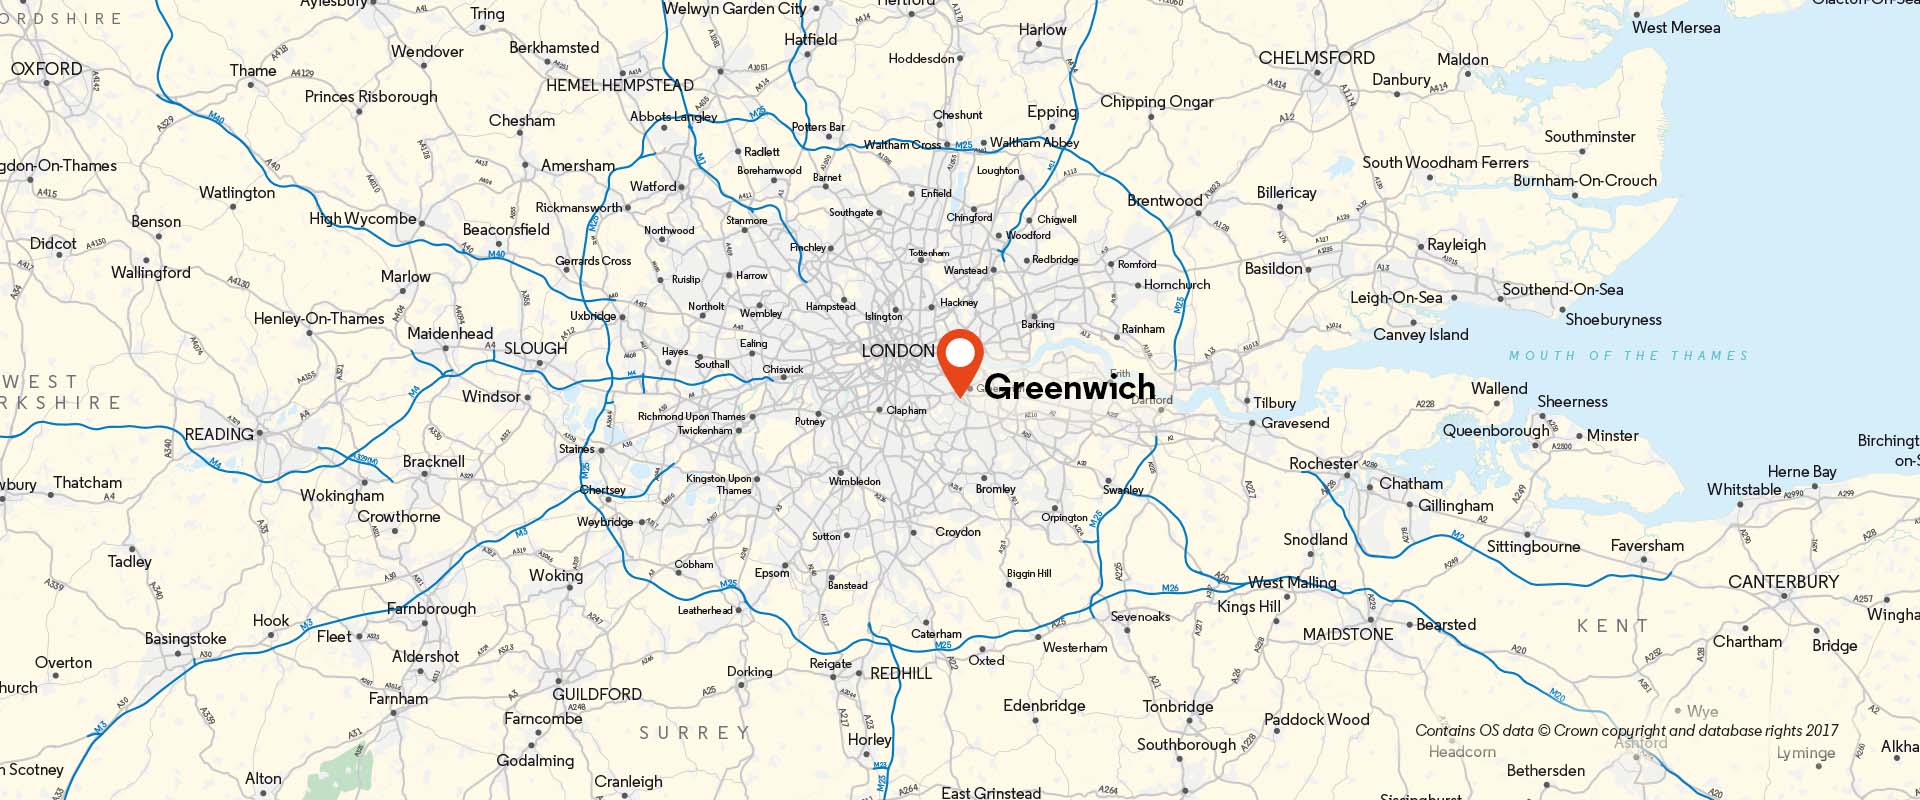 Greenwich CoM location